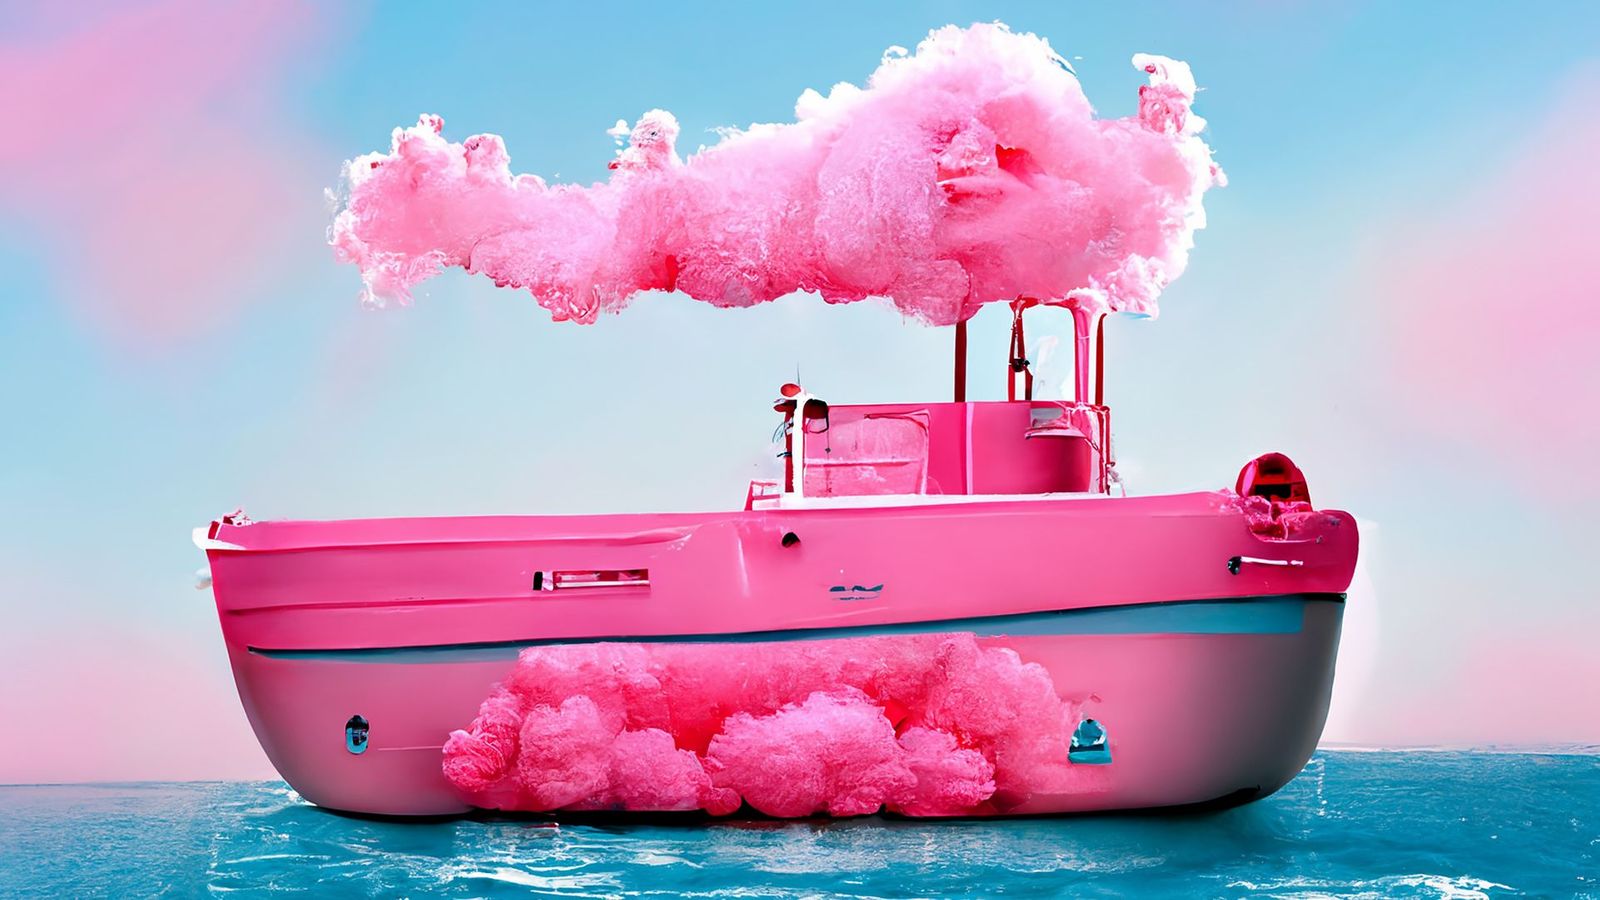 "Cotton Candy Dream Boat" (Credit: Alexander Reben/Gen.art)